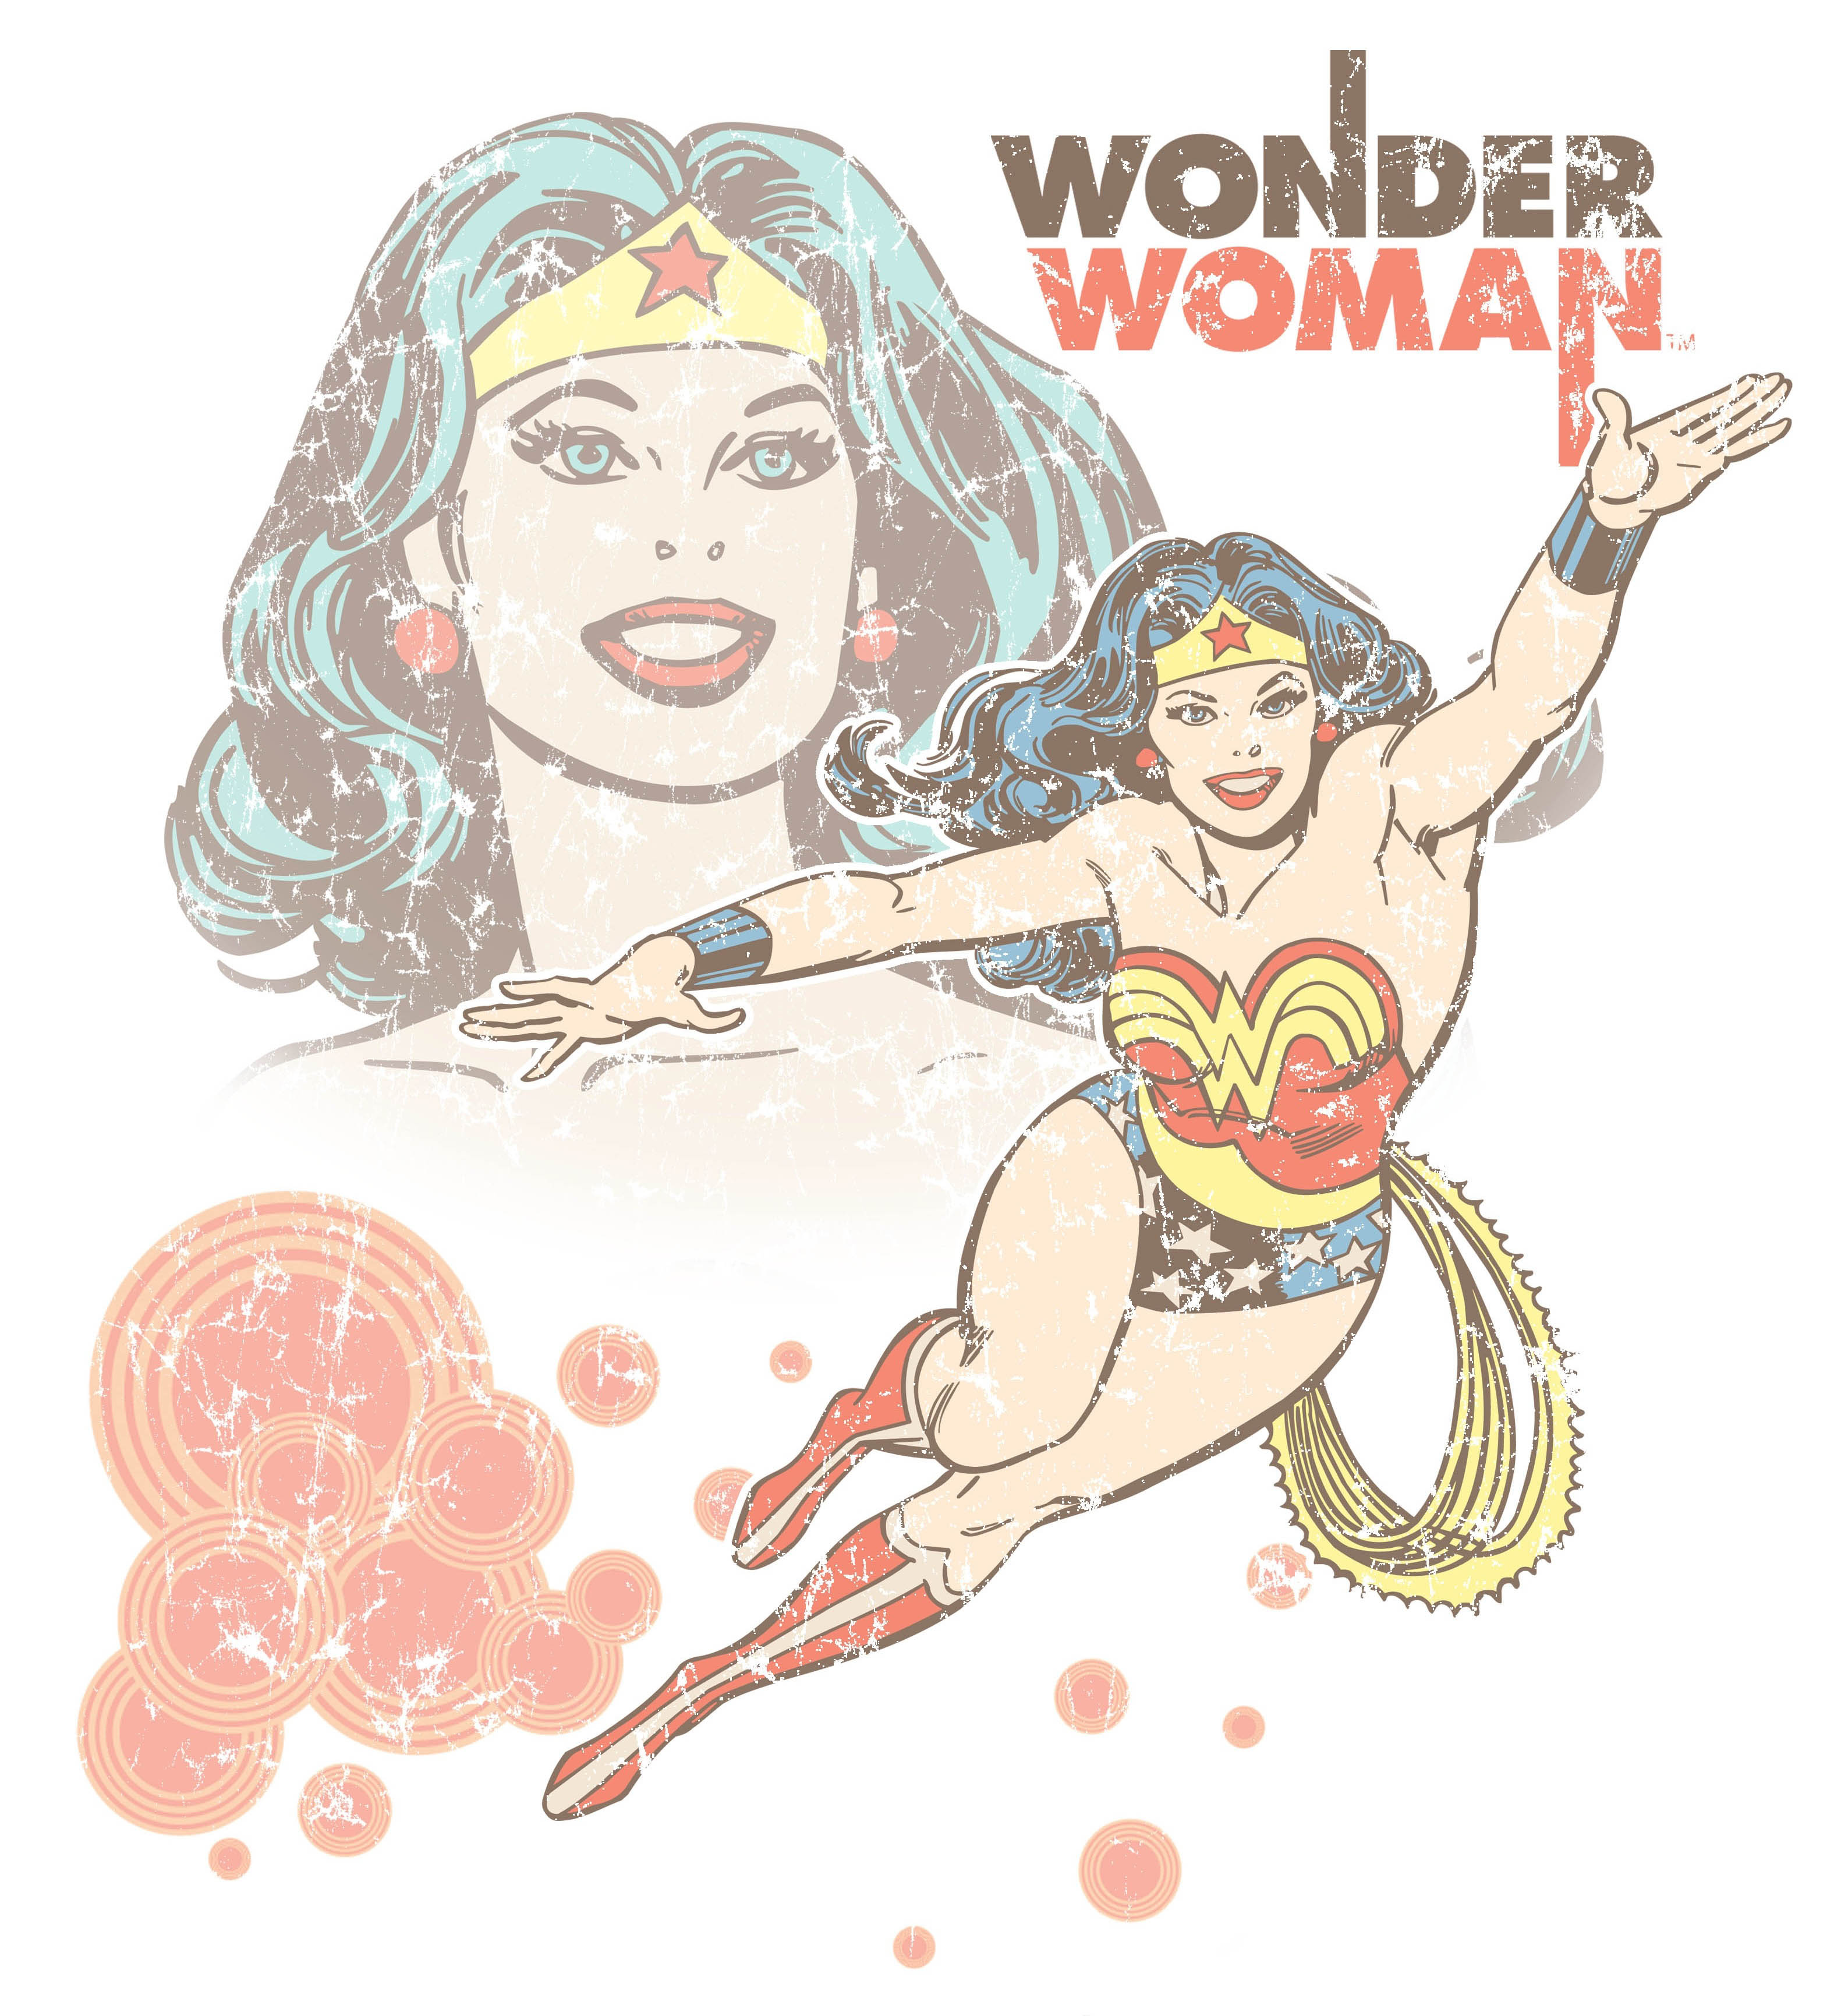 DC Comics Wonder Woman Retro Official Women's T-shirt ()